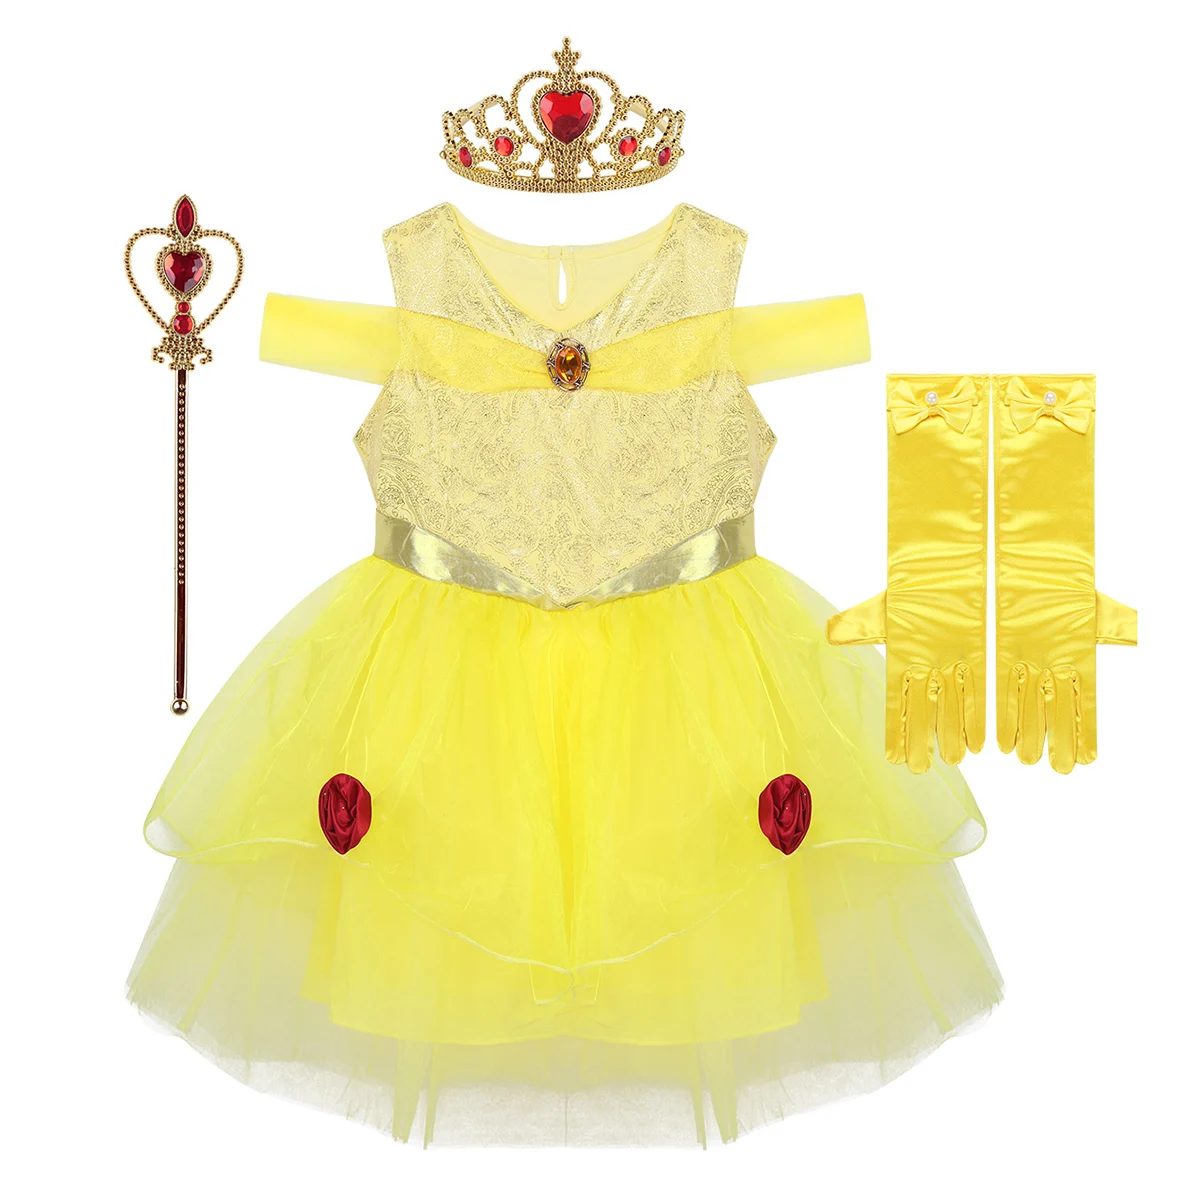 Sequin Star Wand Fairy Princess Fancy Dress Halloween Costume Accessory 2 COLORS